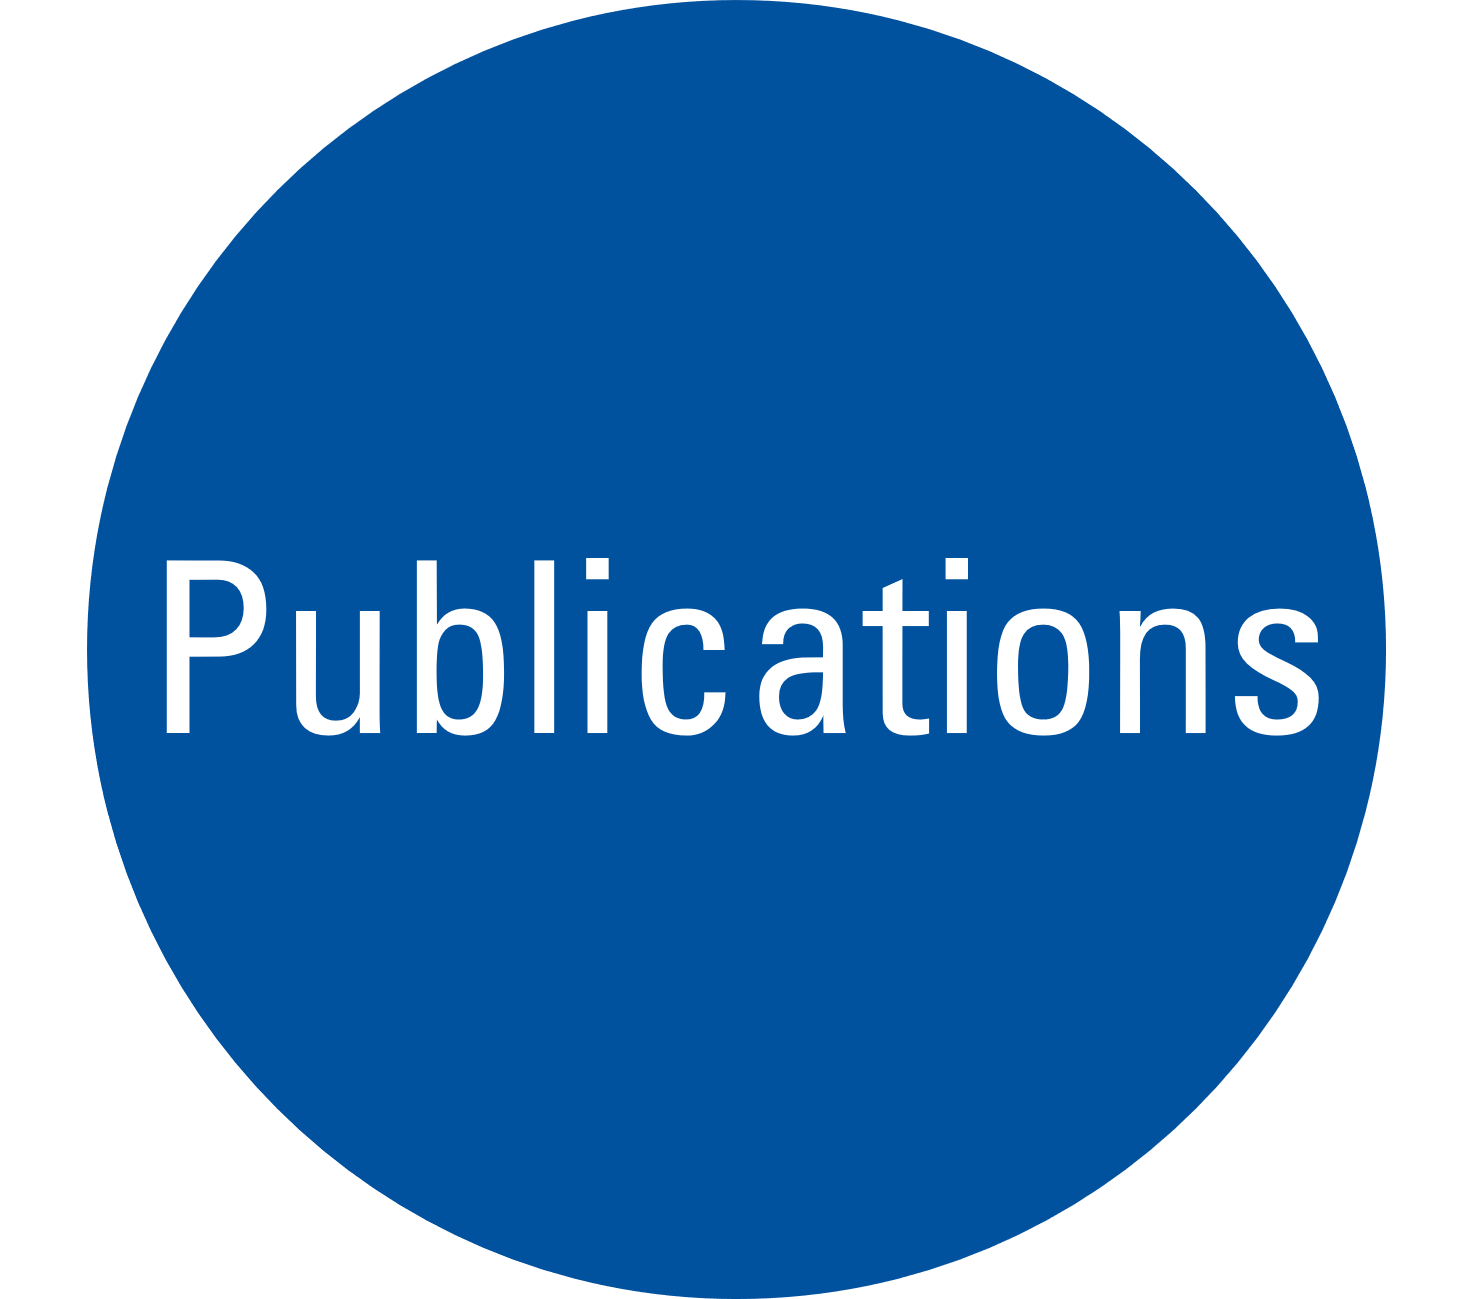 Blauer Kreis mit dem Text "publications".